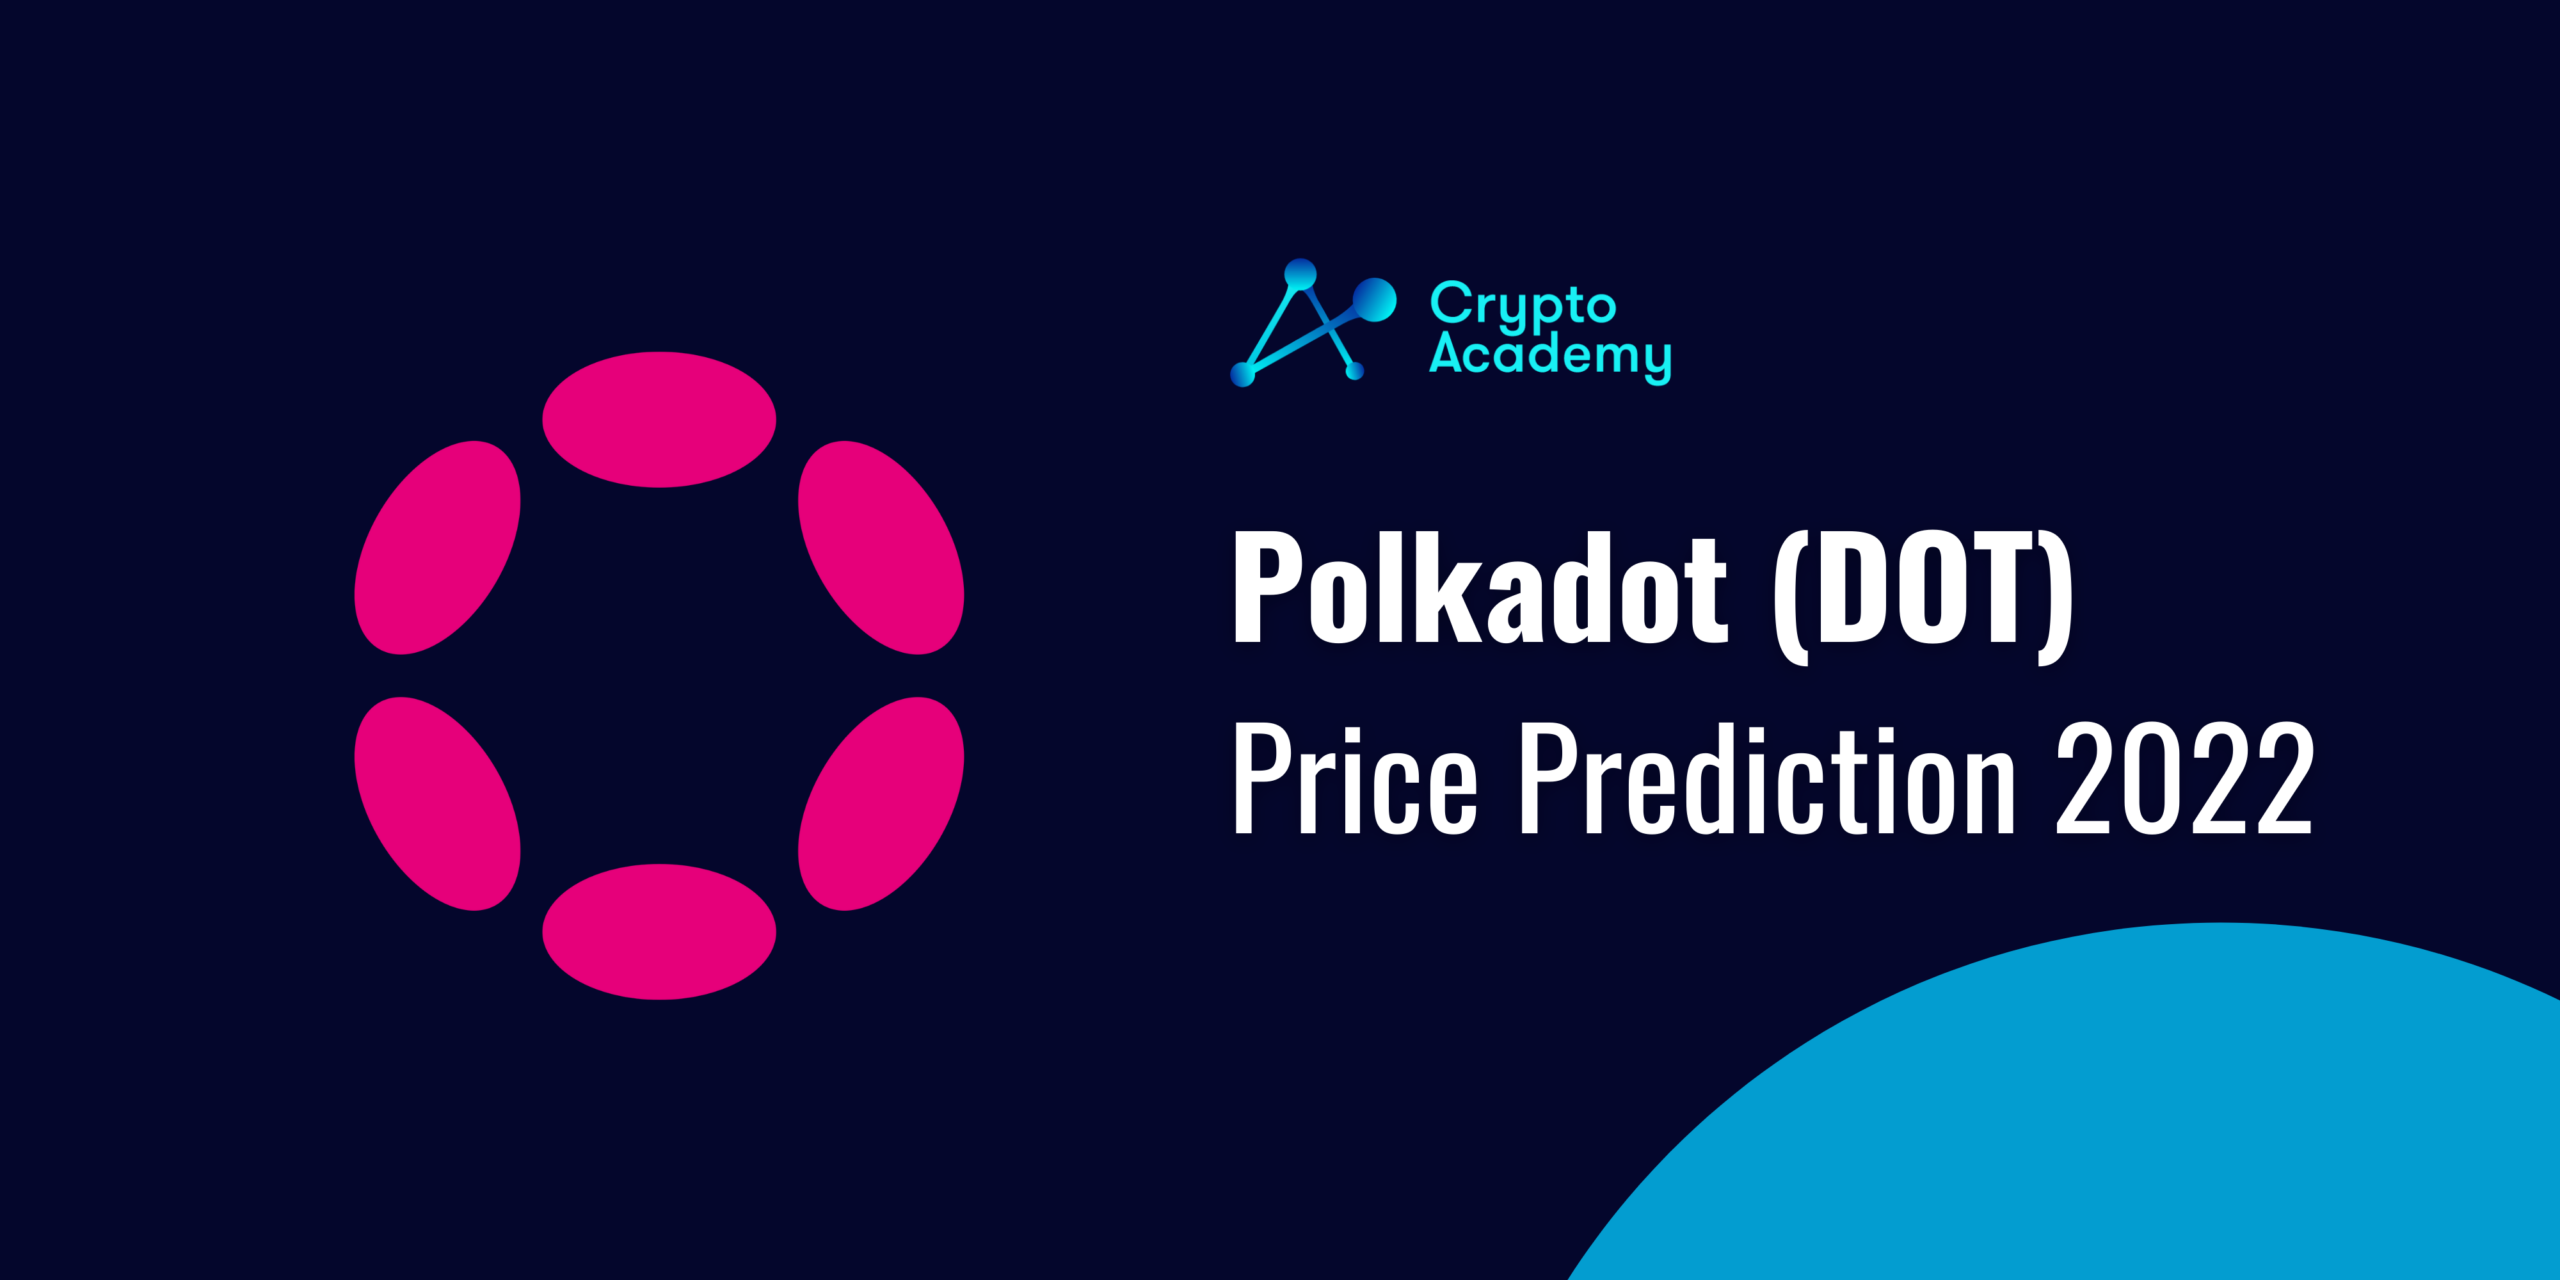 Polkadot Price Prediction 2022 and Beyond - Can DOT Reach $100?